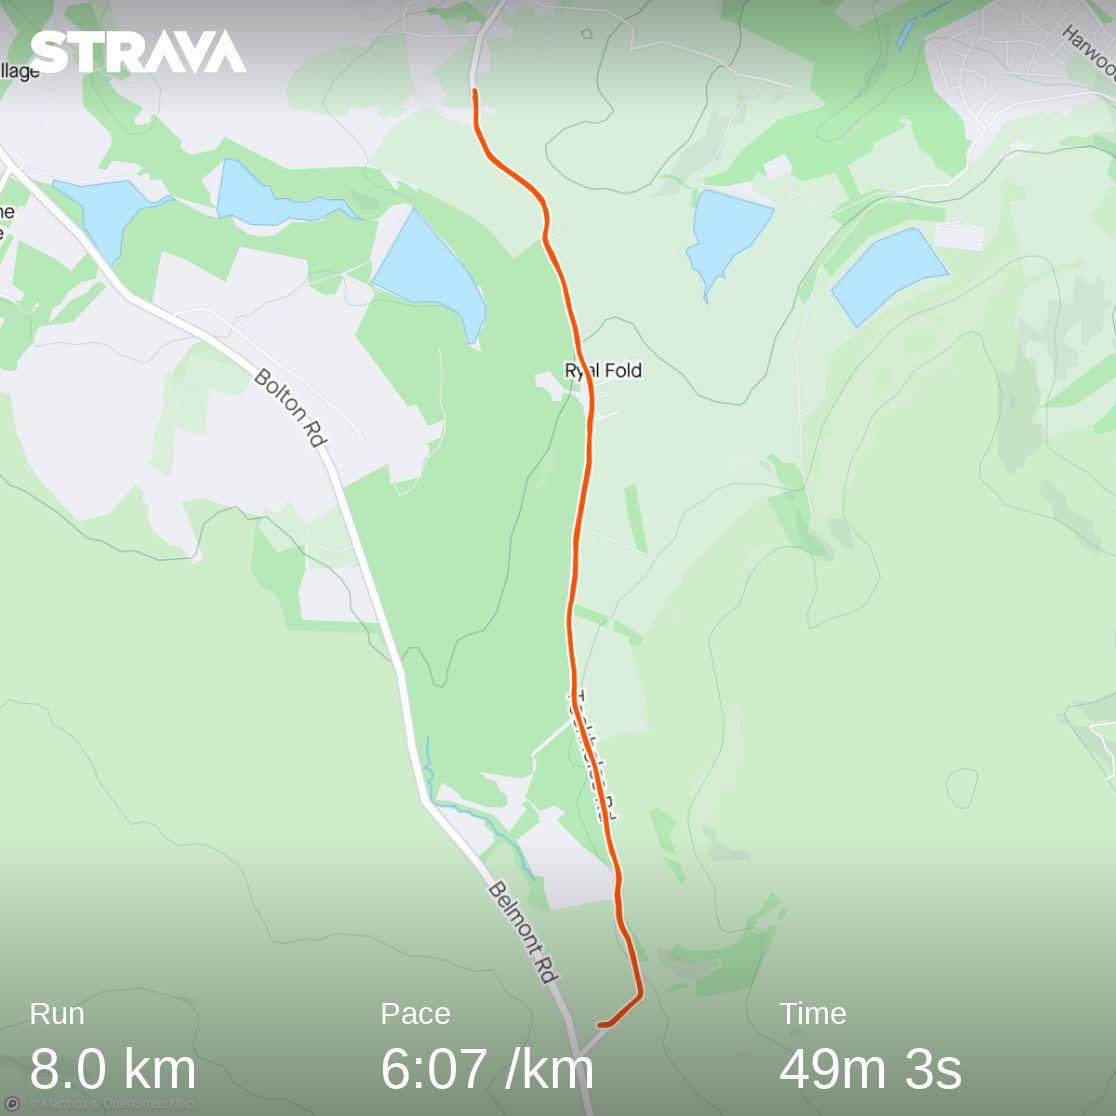 Saturday Morning Run 🏃🏻‍♂️

Check out my run on Strava.
strava.app.link/0RQEaSDqHAb